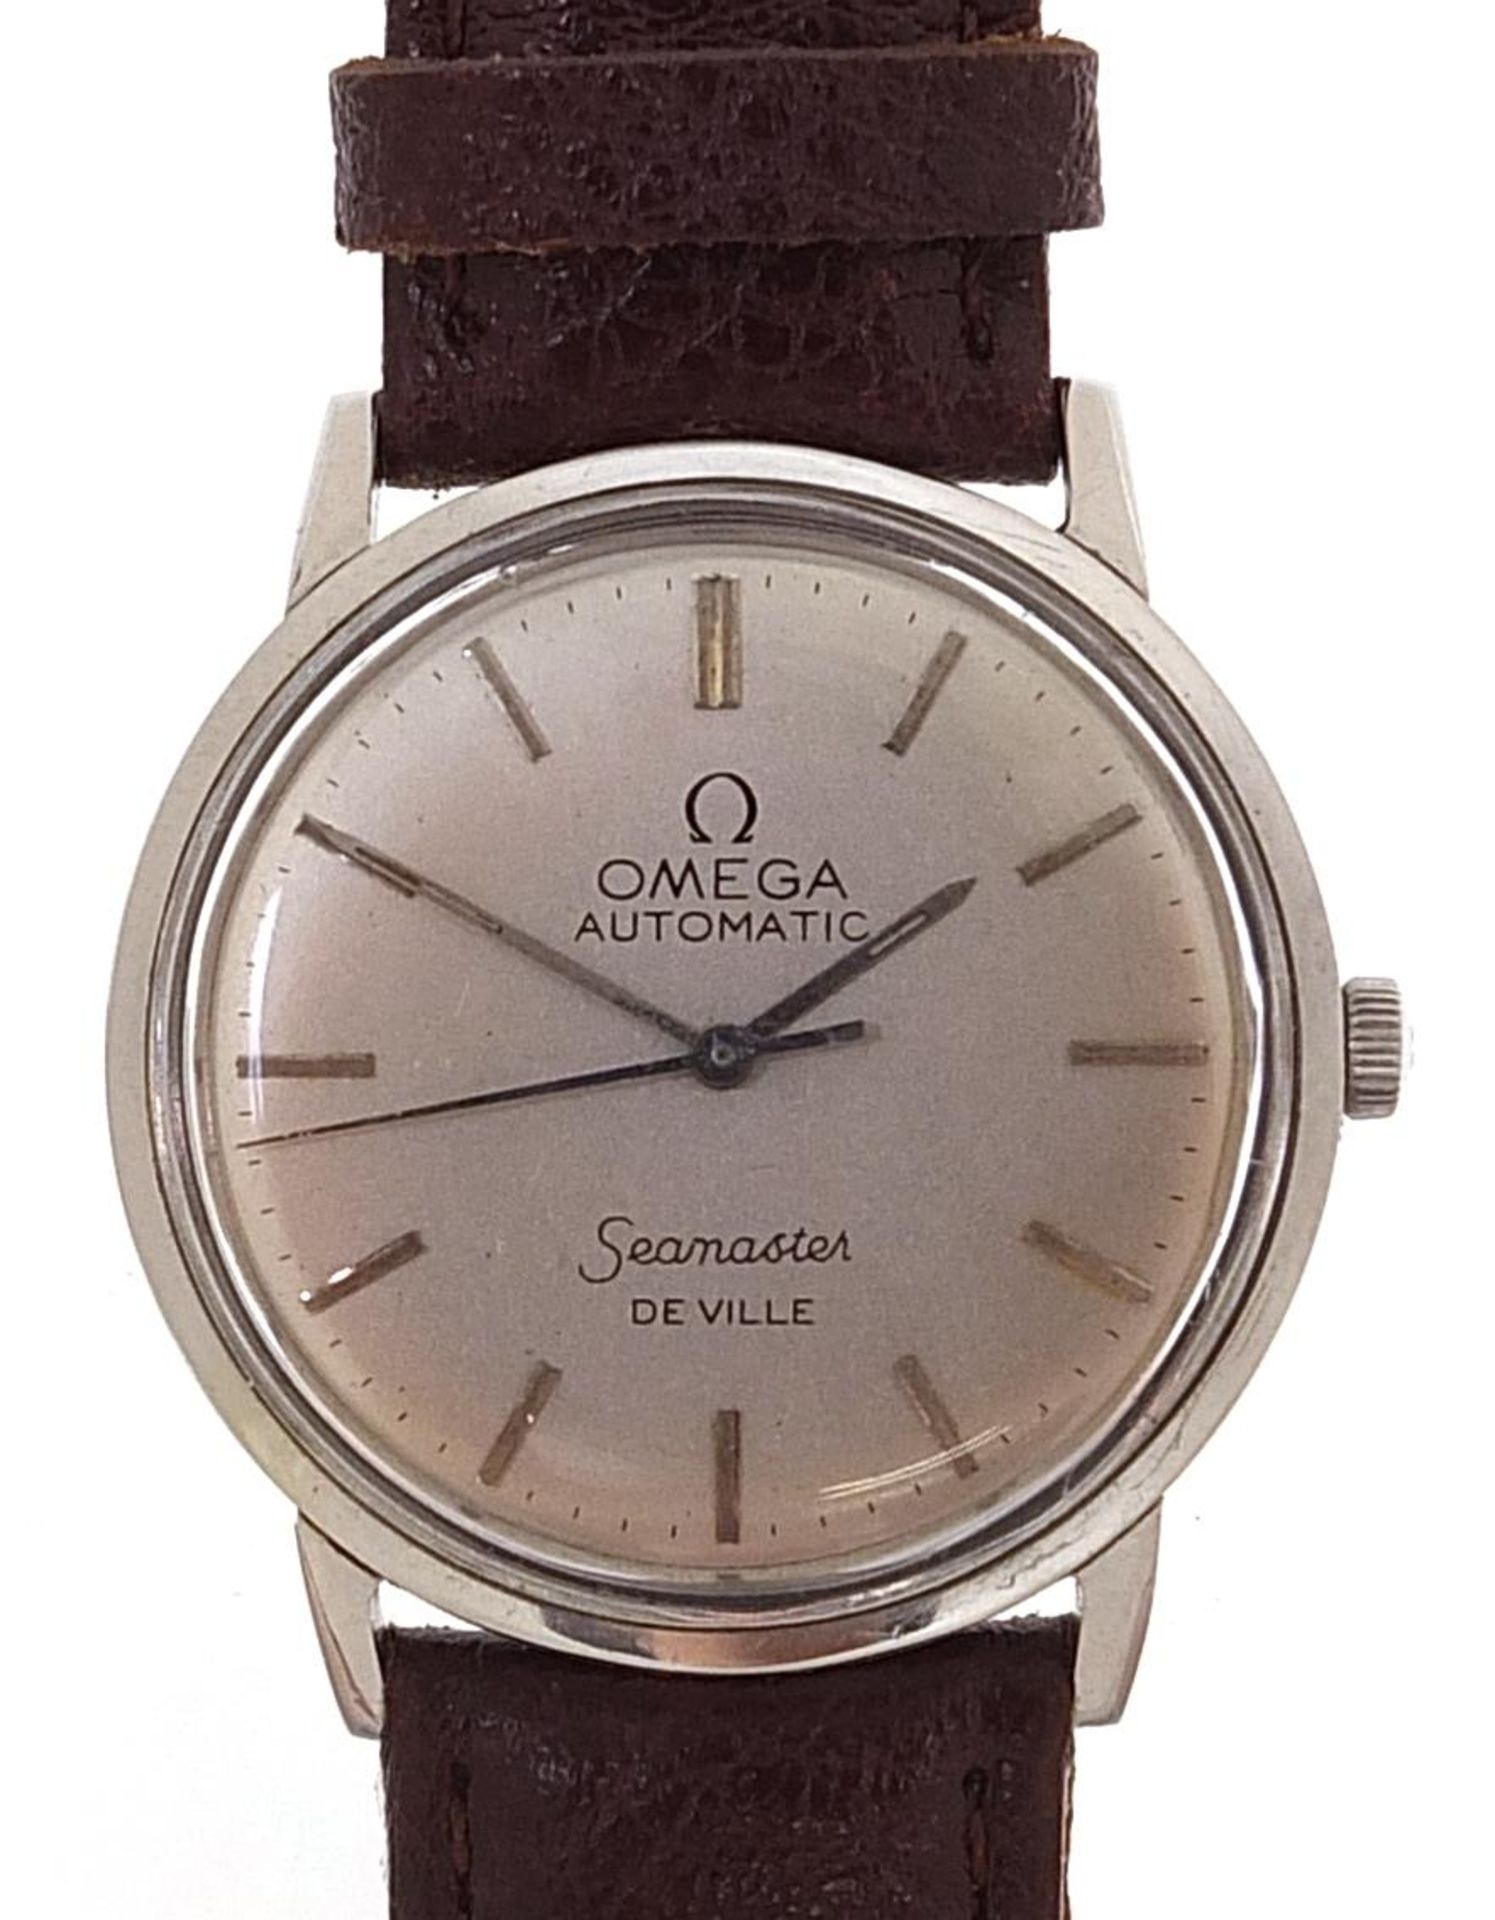 Omega, vintage gentlemen's Omega Deville Seamaster automatic wristwatch, 33mm in diameter